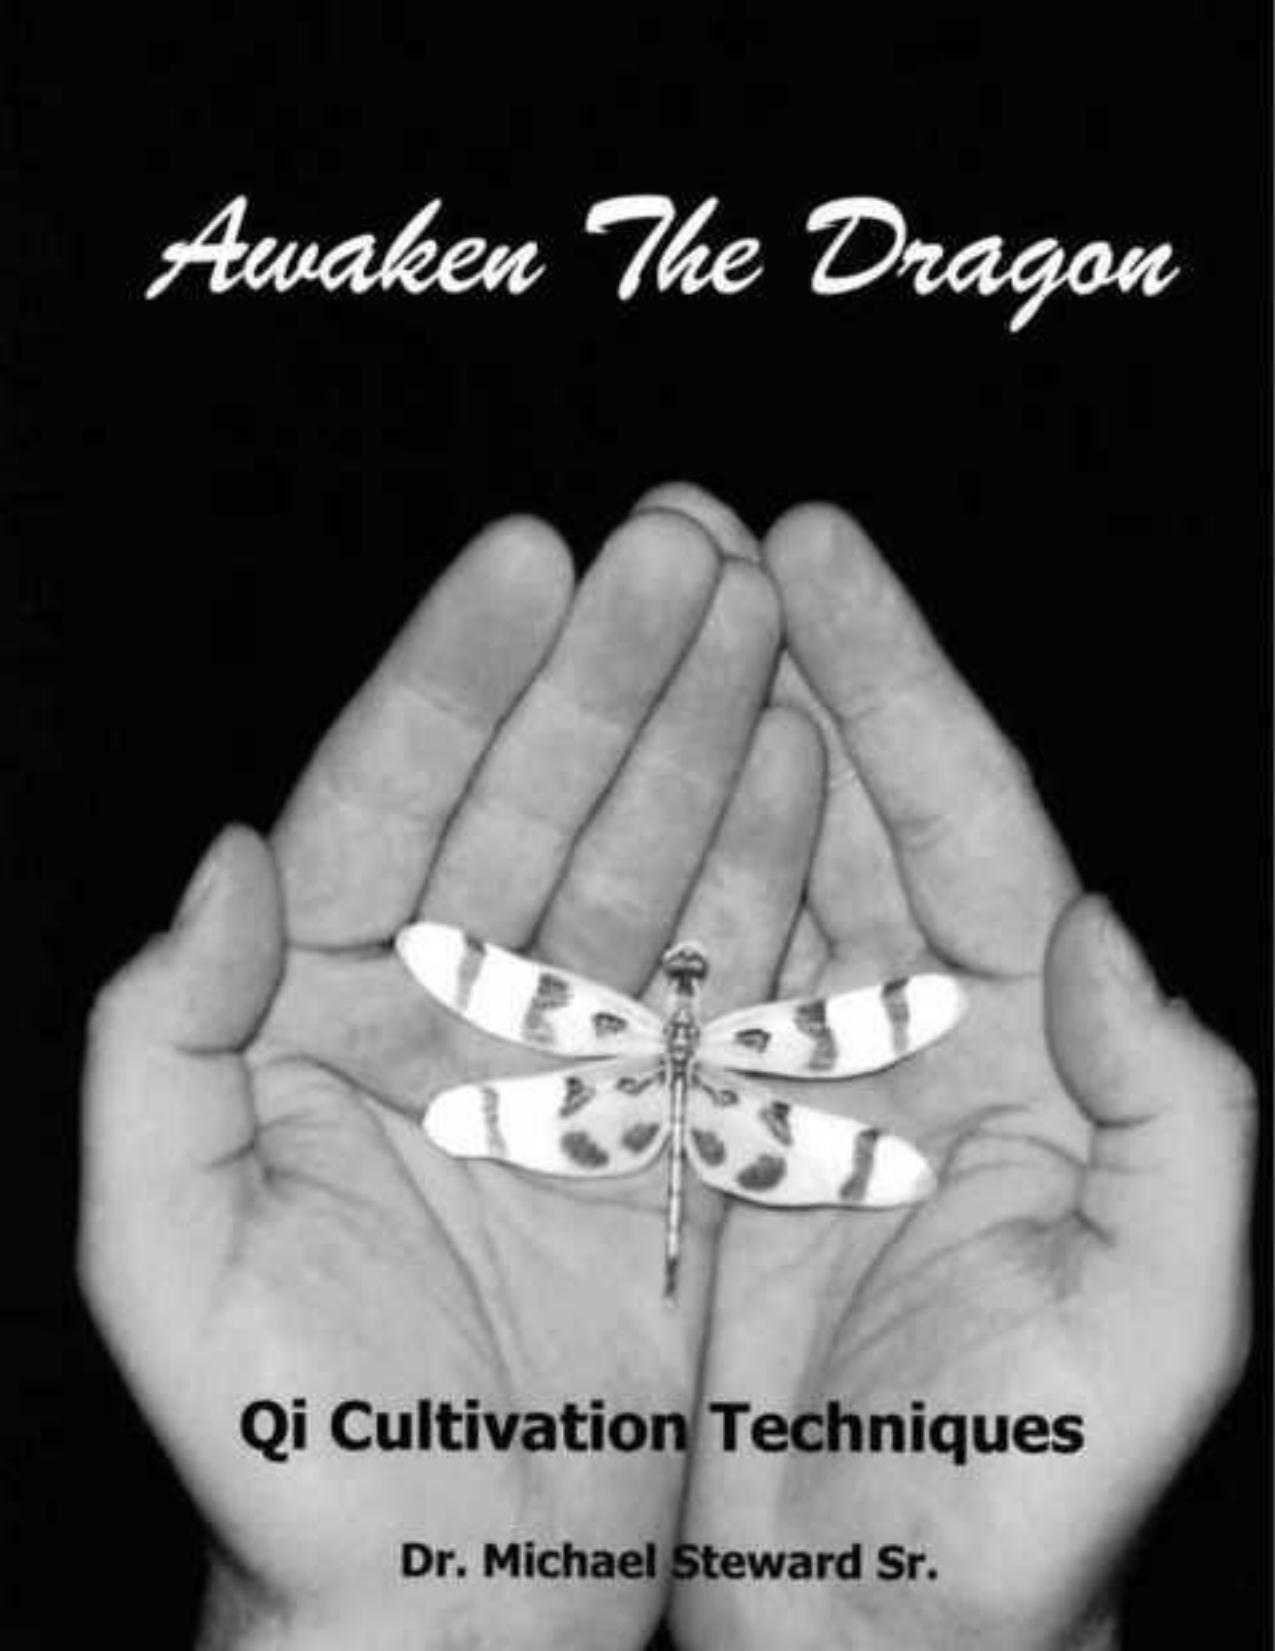 Awaken the Dragon - Qi Cultivation Techniques by Dr. Michael Steward Sr